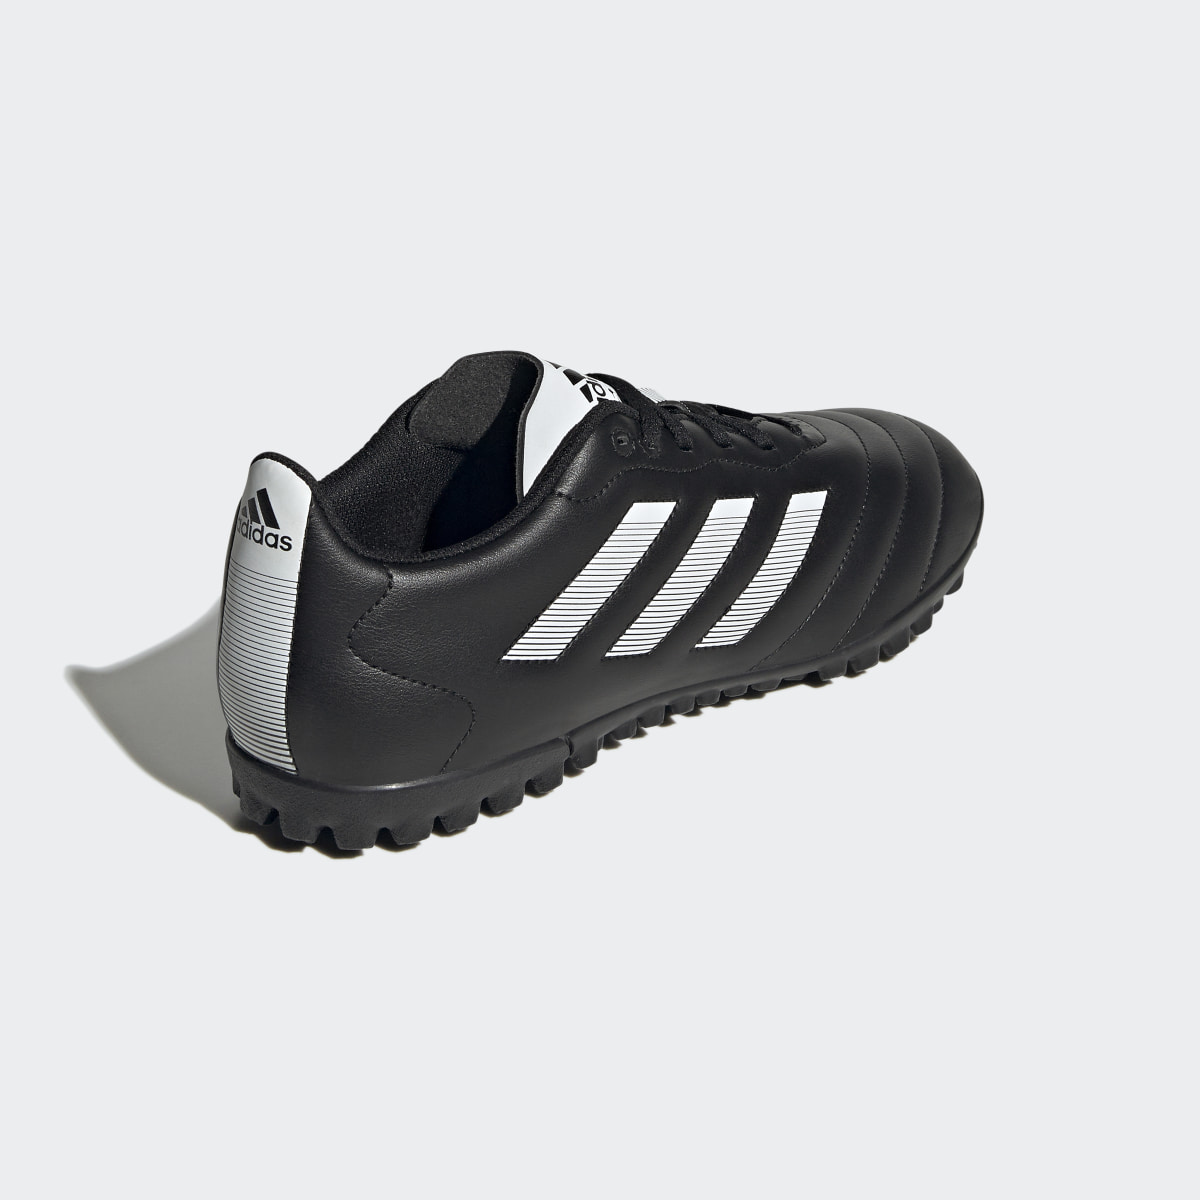 Adidas Goletto VIII Turf Shoes. 6